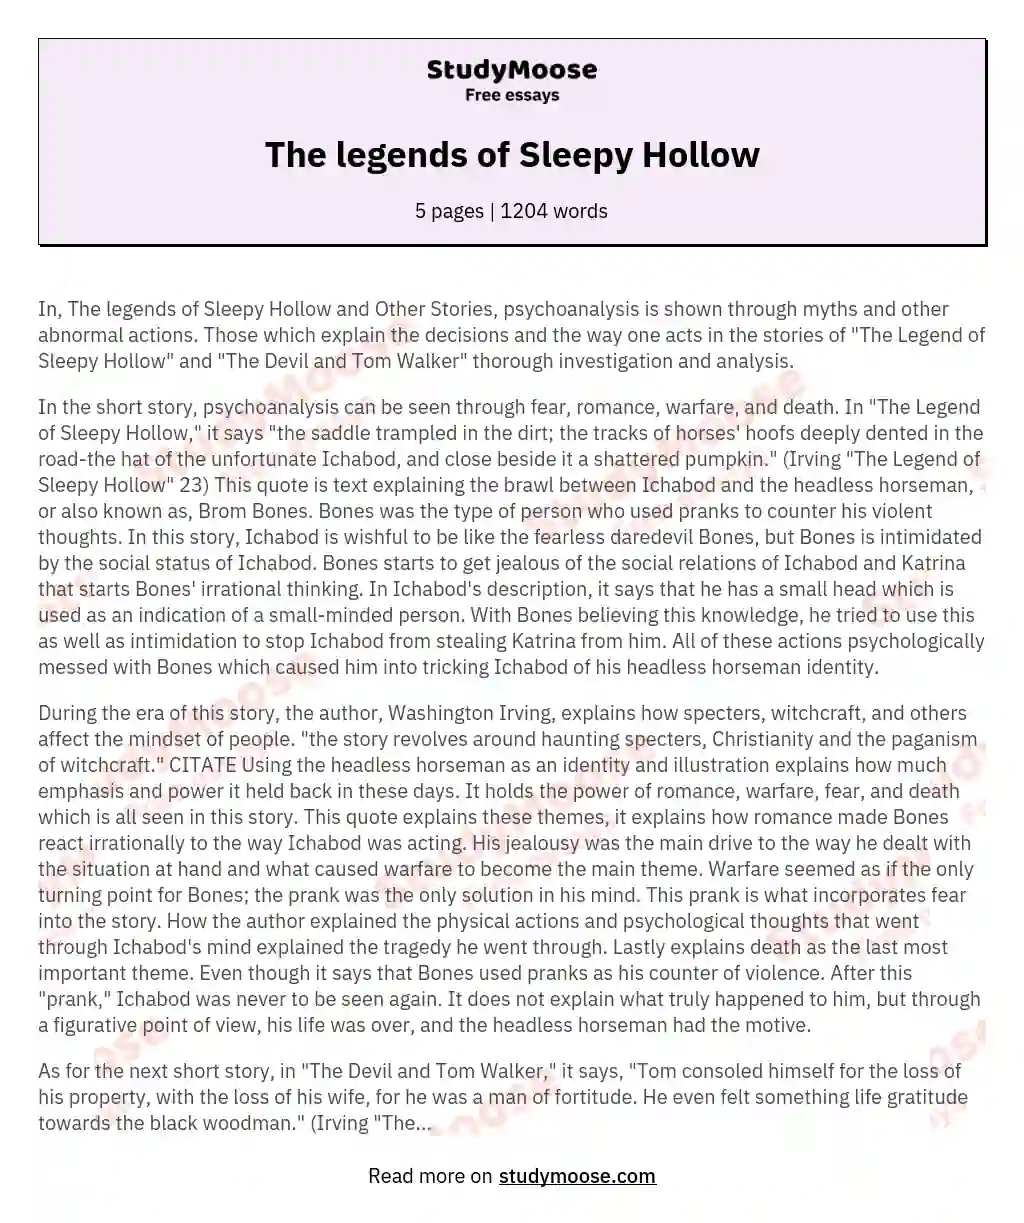 The legends of Sleepy Hollow essay